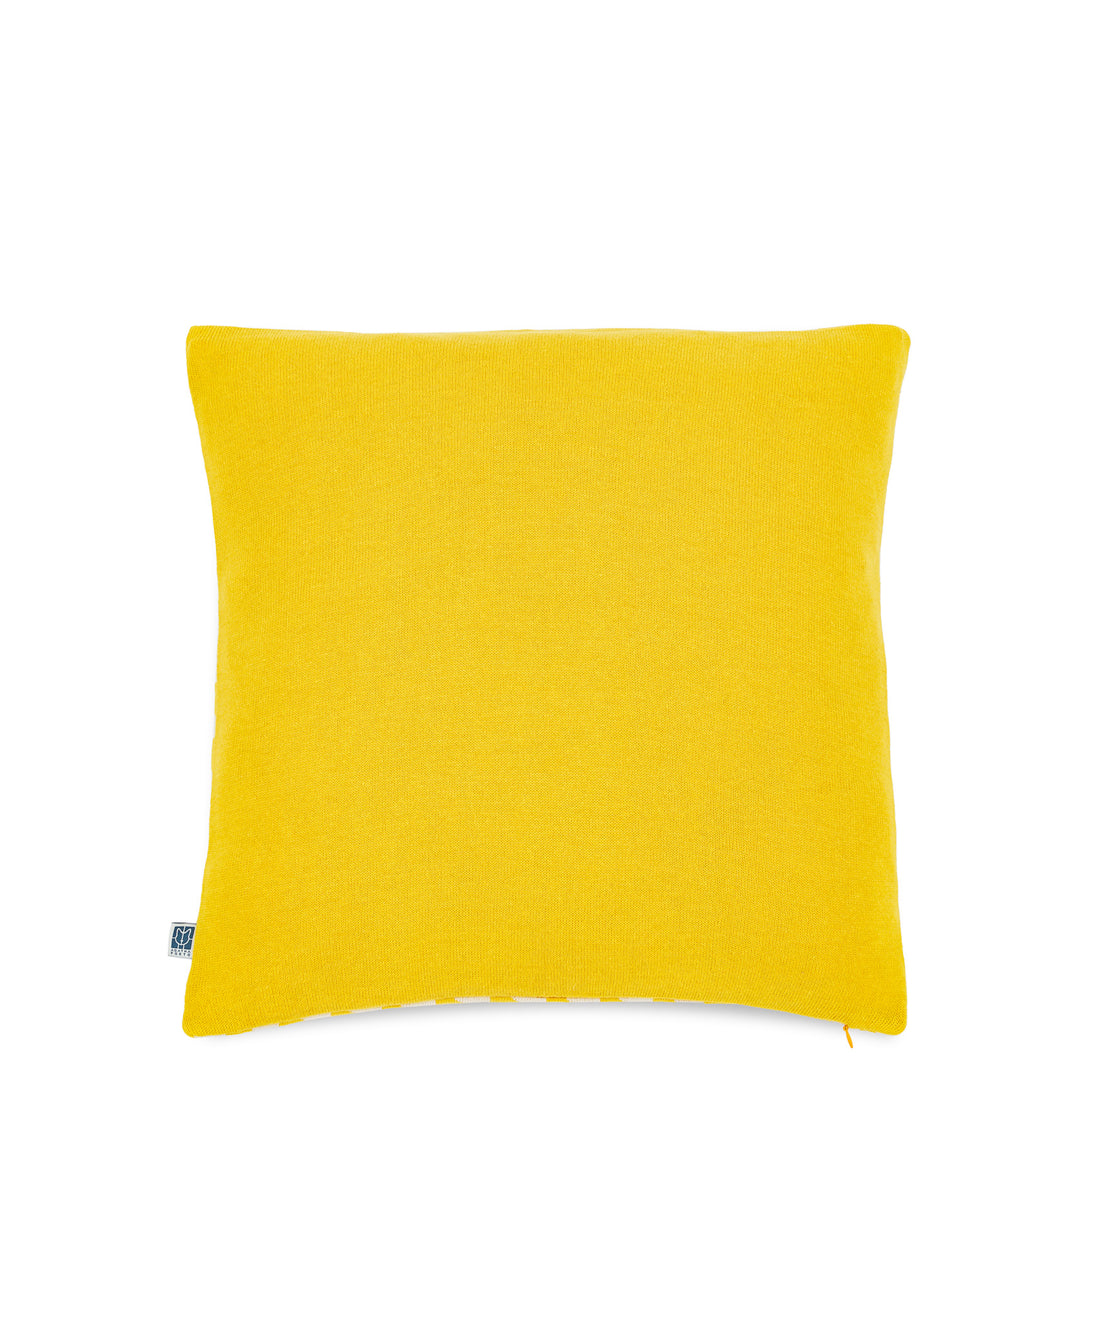 Cushion Cover Azulejo Coimbra Yellow